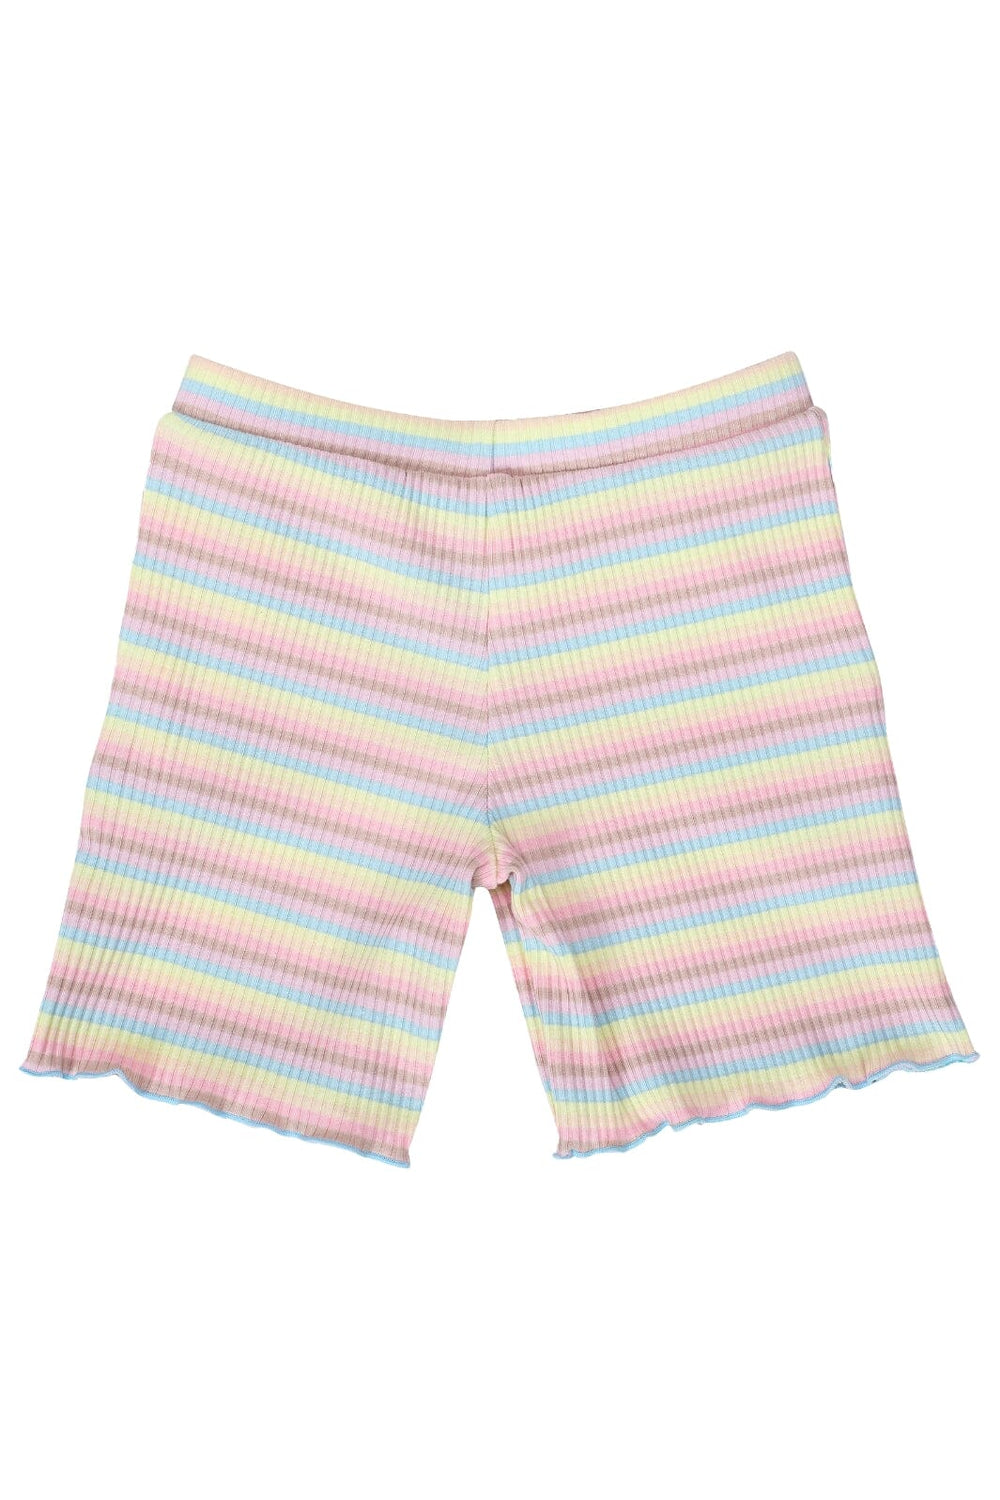 Liberte Ami - Natalia-Shorts-Kids - Dusty Multicolor Stripe Shorts 